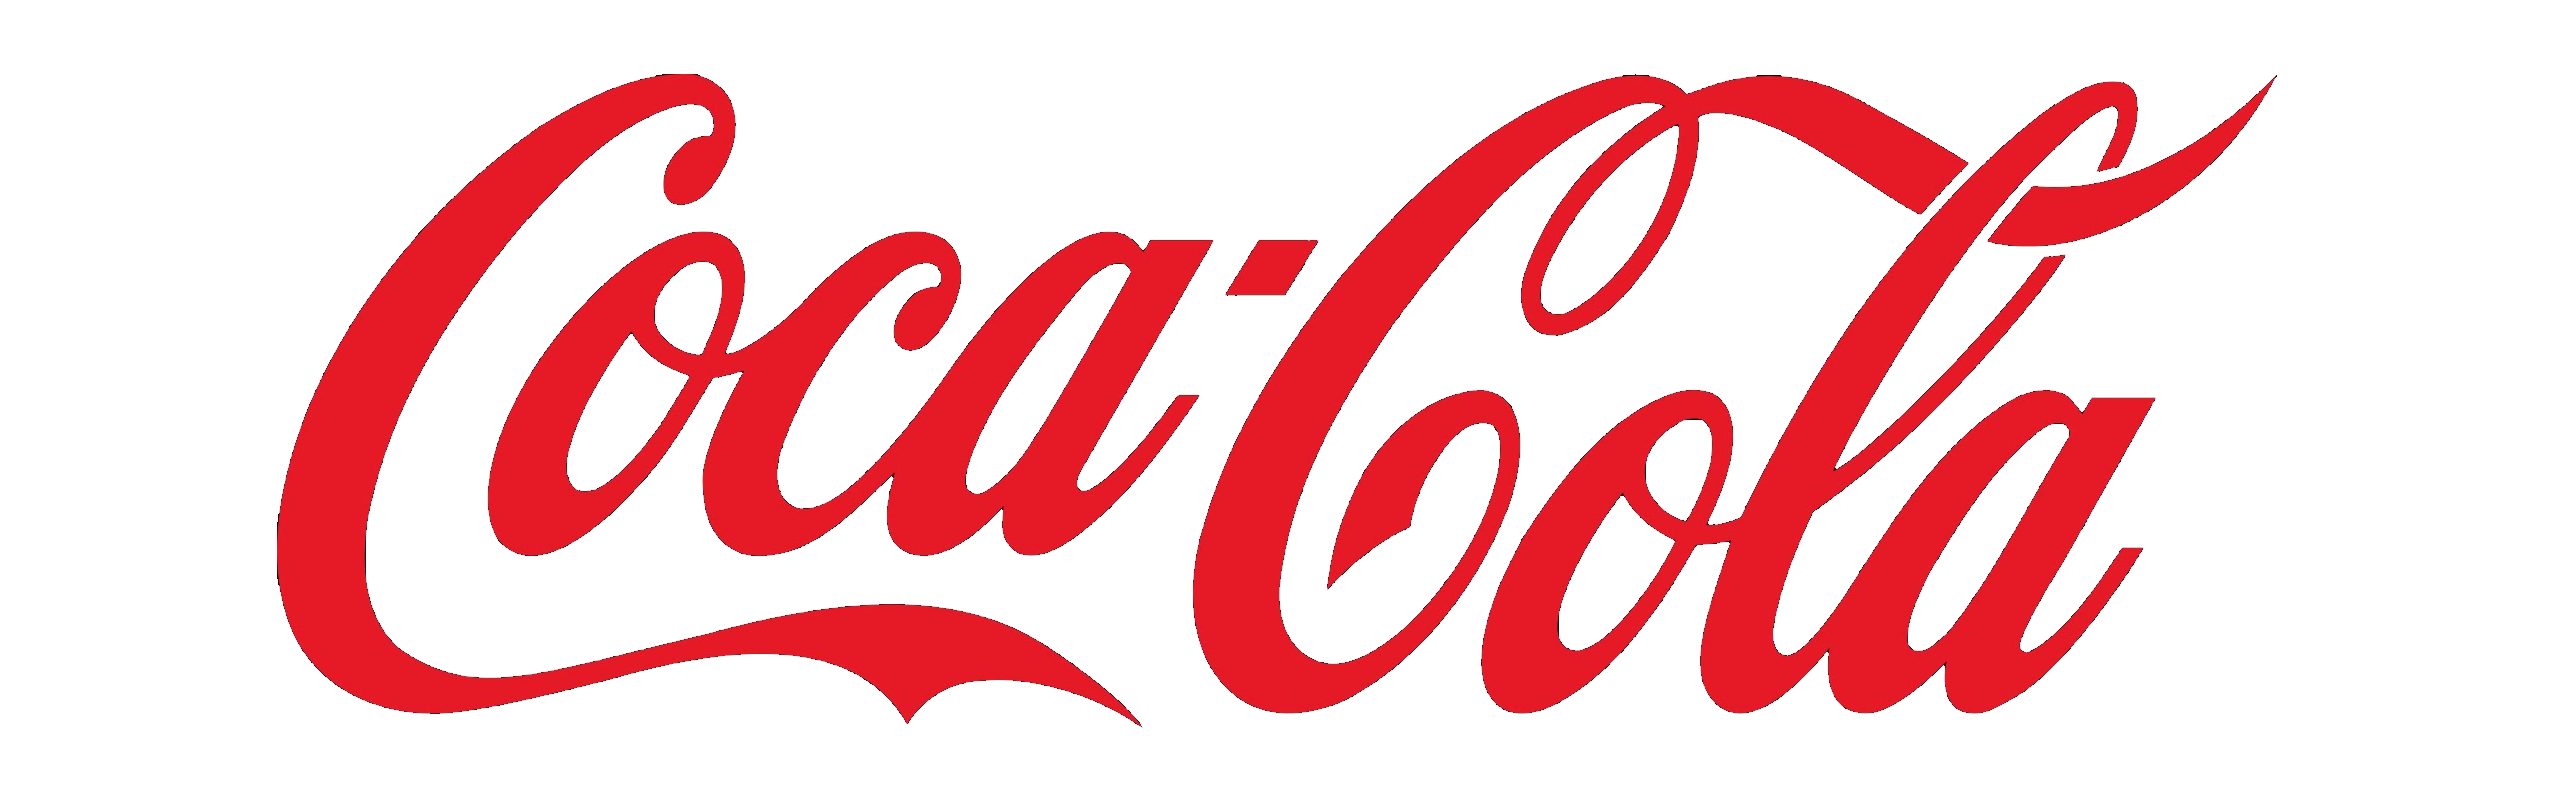 Coca-Cola logo